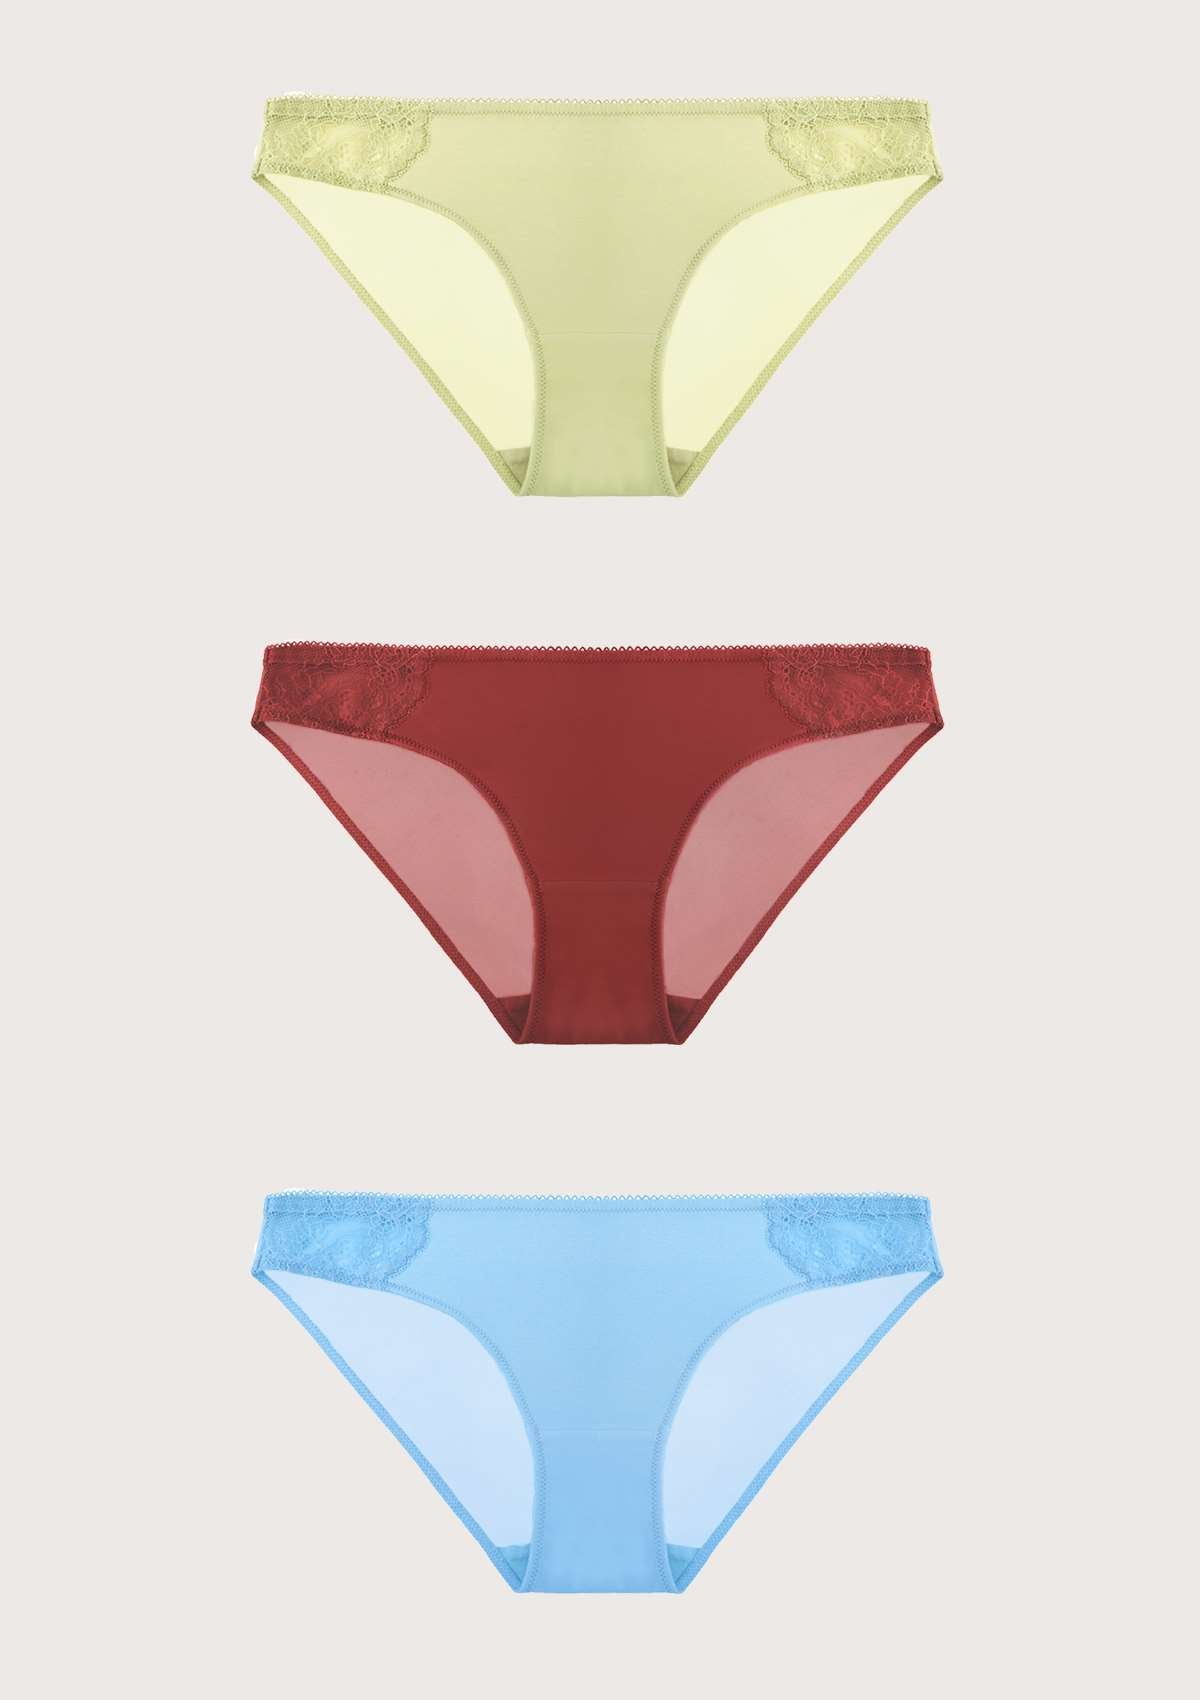 HSIA Soft Stretch Lace Bikini Panties 3 Pack - S / Light Green+Crimson+Light Blue